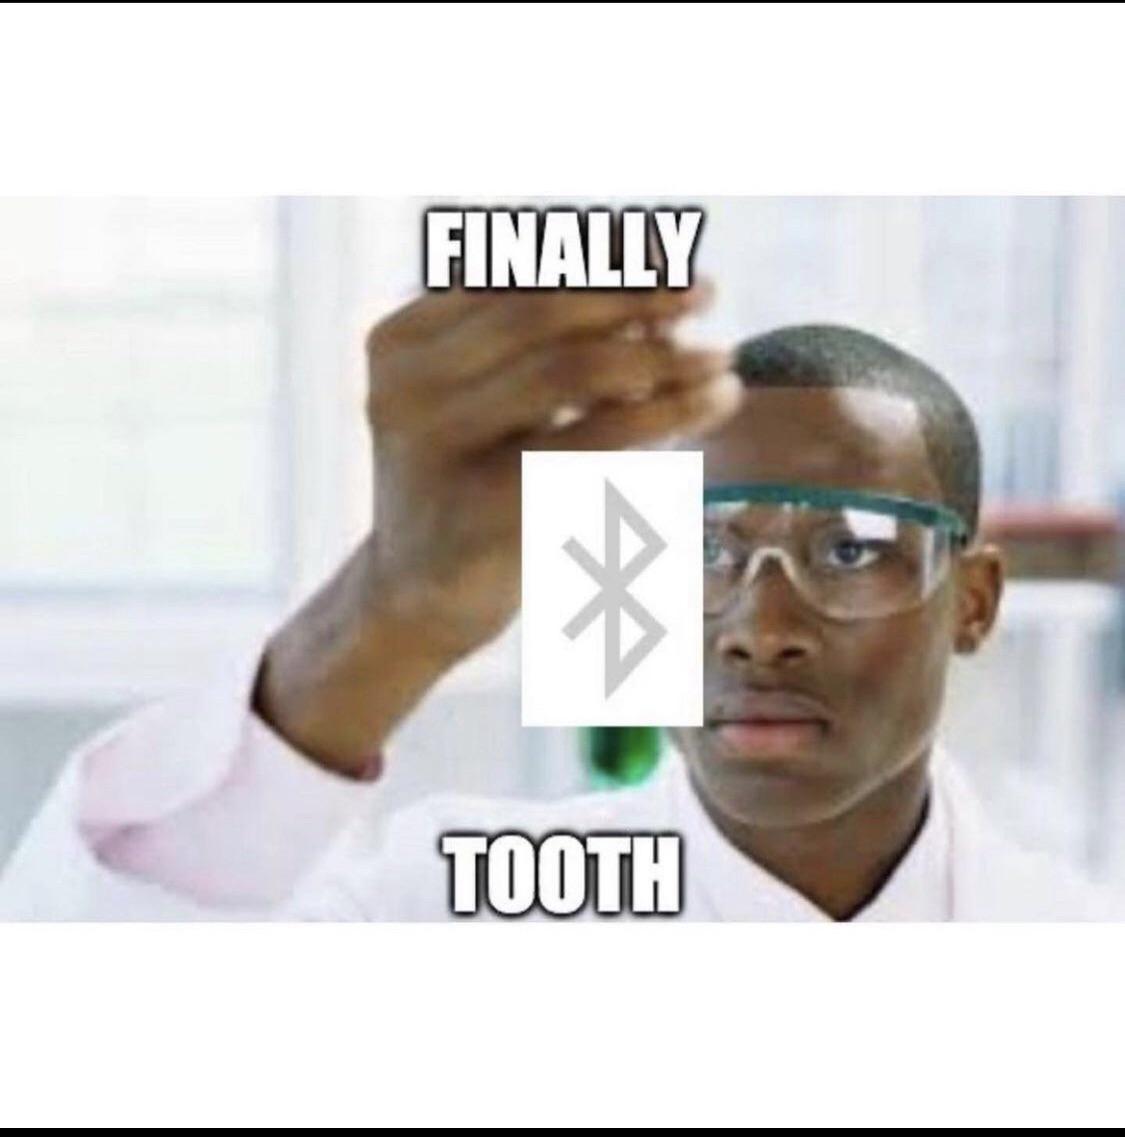 dank memes - funny memes - chemistry meme template - Finally Tooth